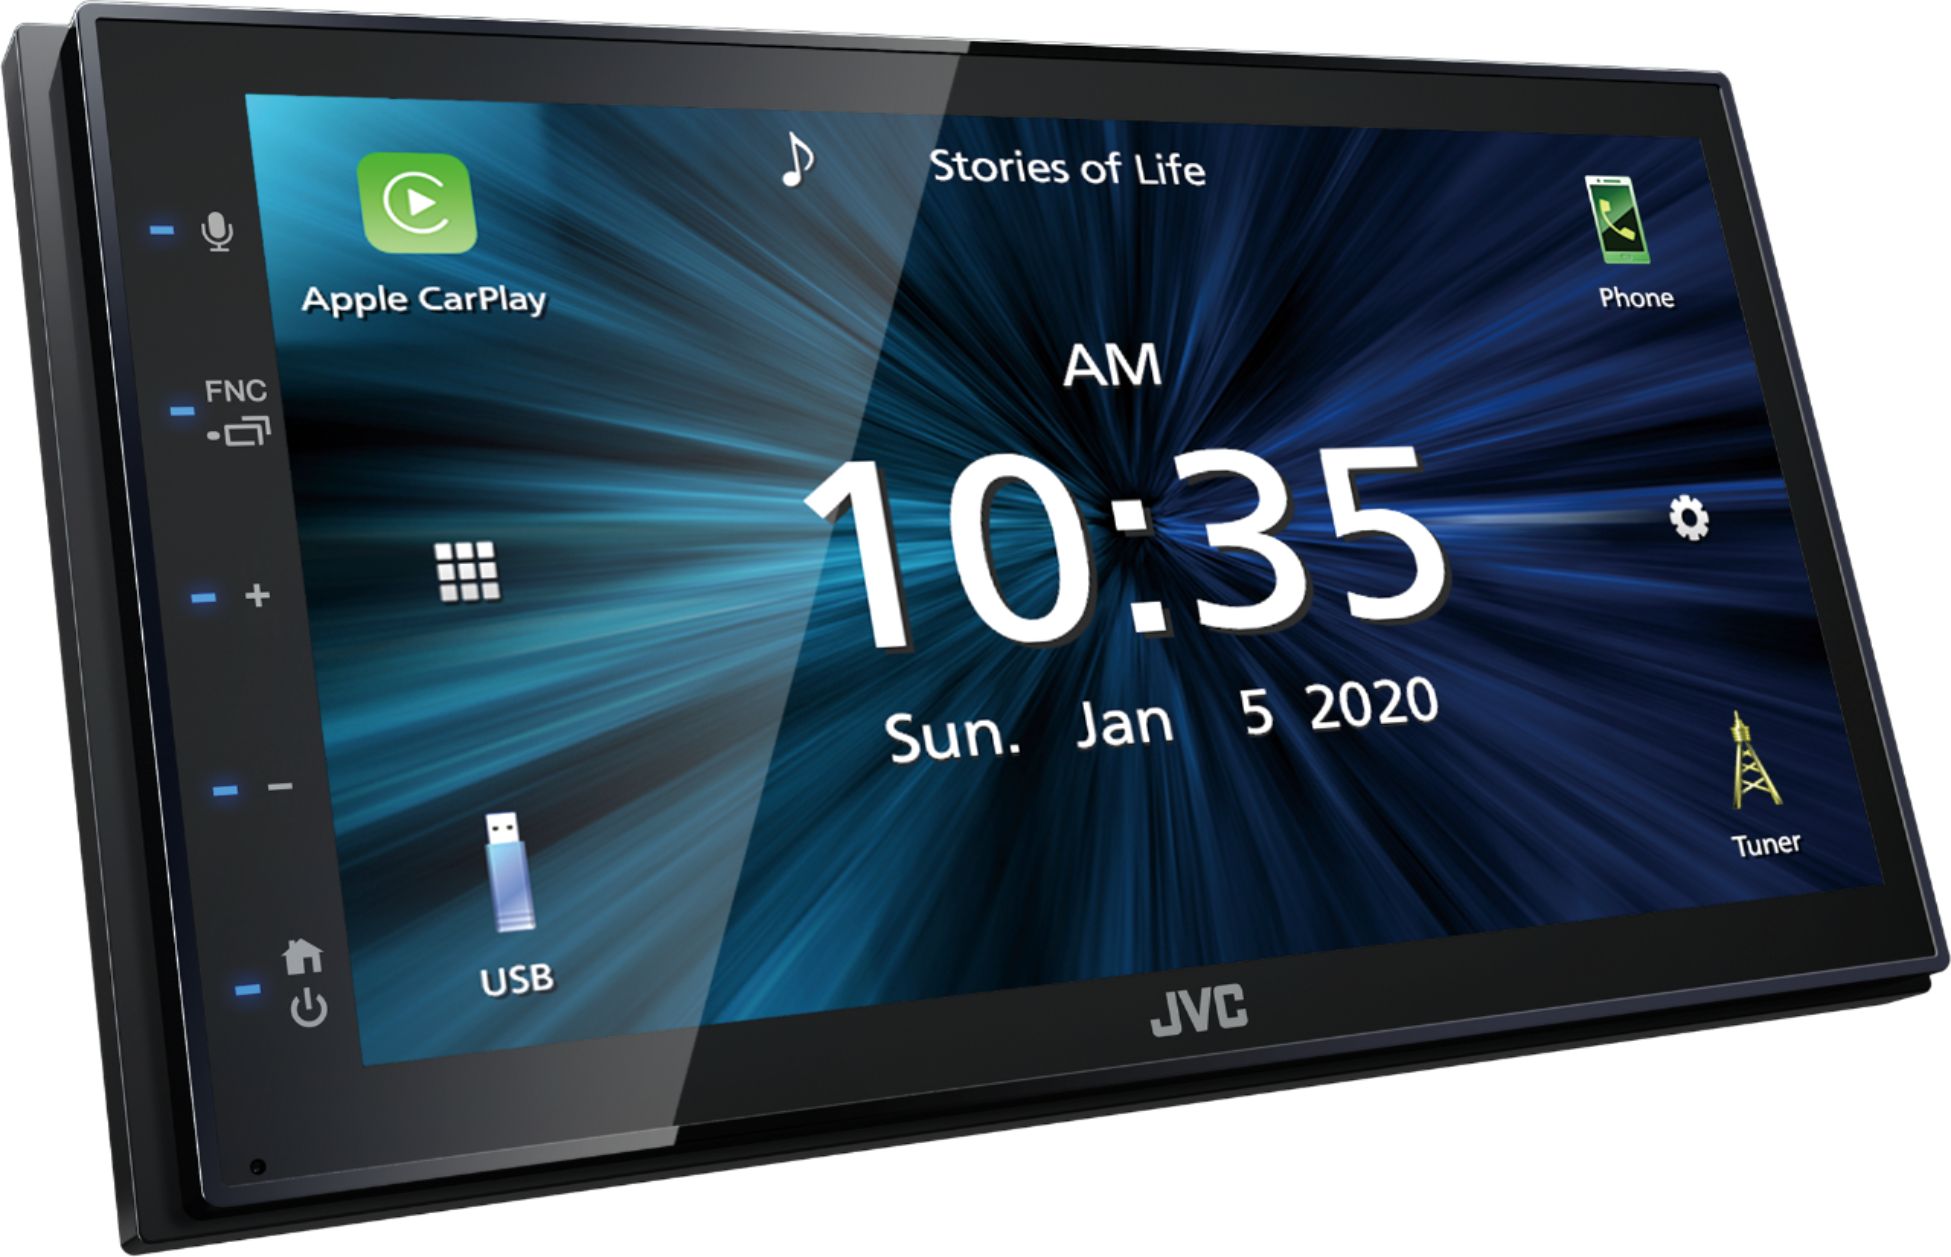 JVC KW-M565DBT: Autoradio, 2-DIN, CD, DAB+, LCD, AndroidAuto